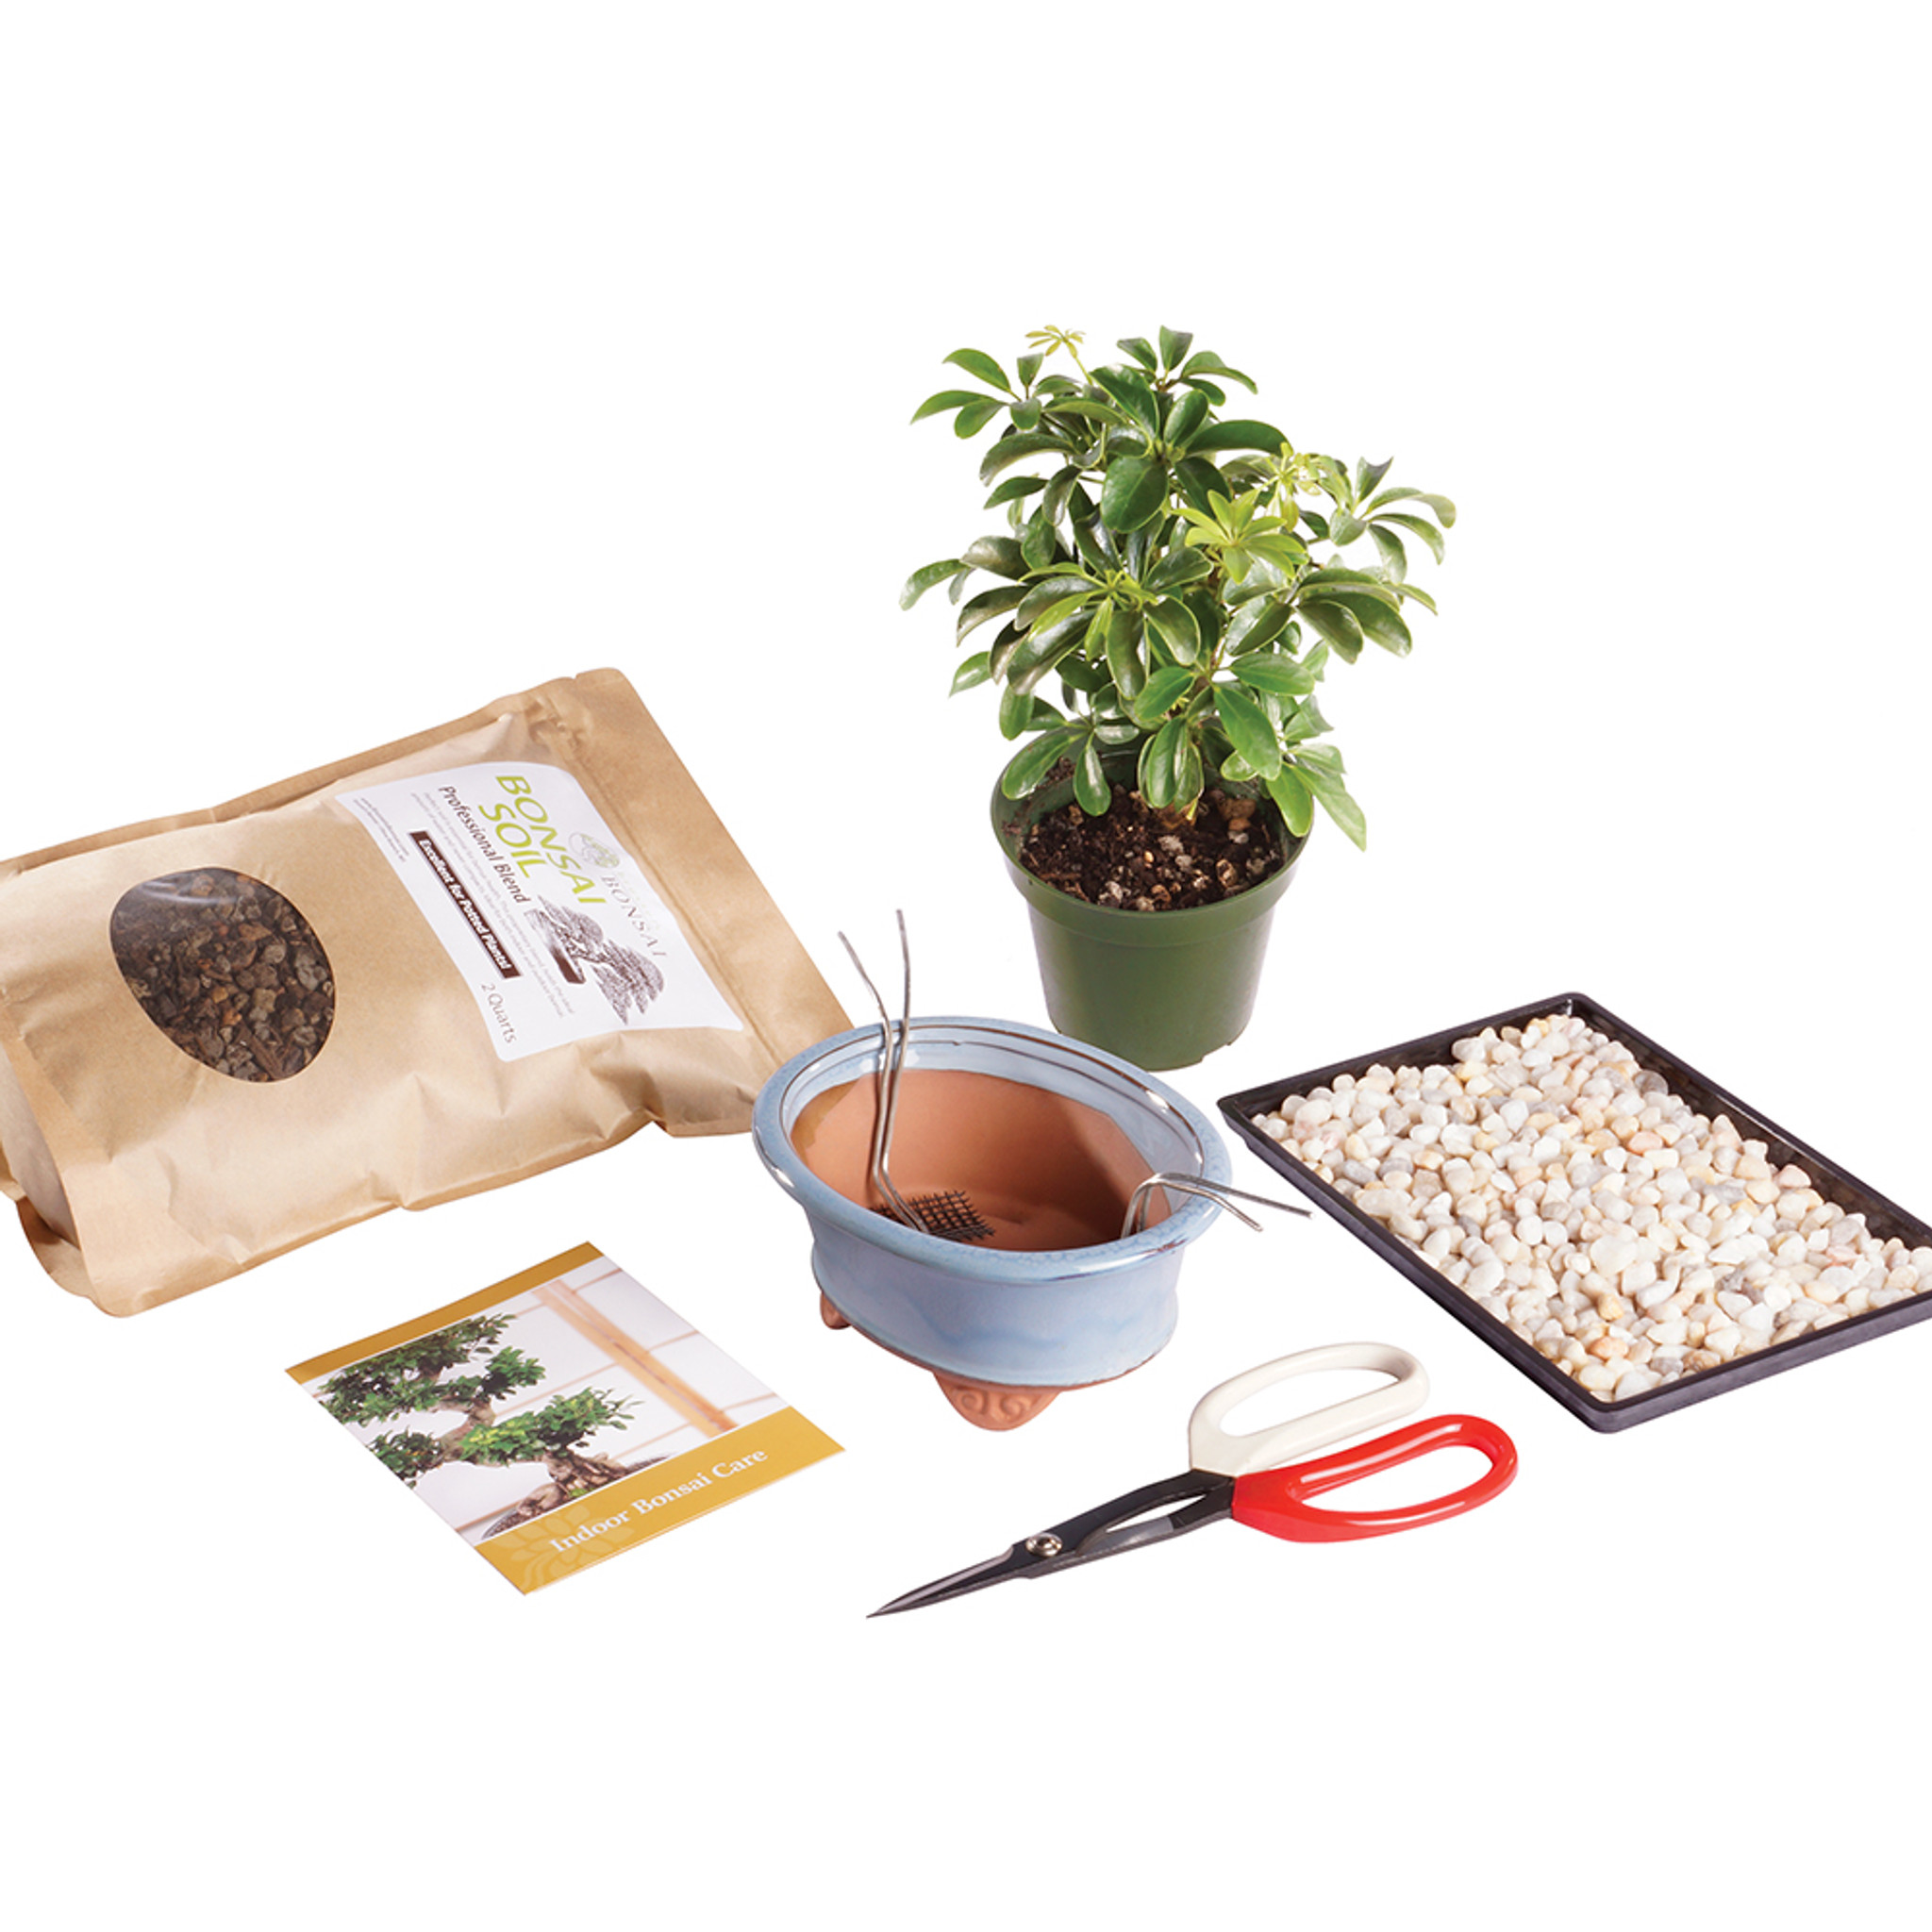 https://cdn11.bigcommerce.com/s-bhqinueo9m/images/stencil/2048x2048/products/15672/9322/hawaiian-umbrella-kit-indoor-bonsai-dthukit-2__18347.1522336907.jpg?c=2